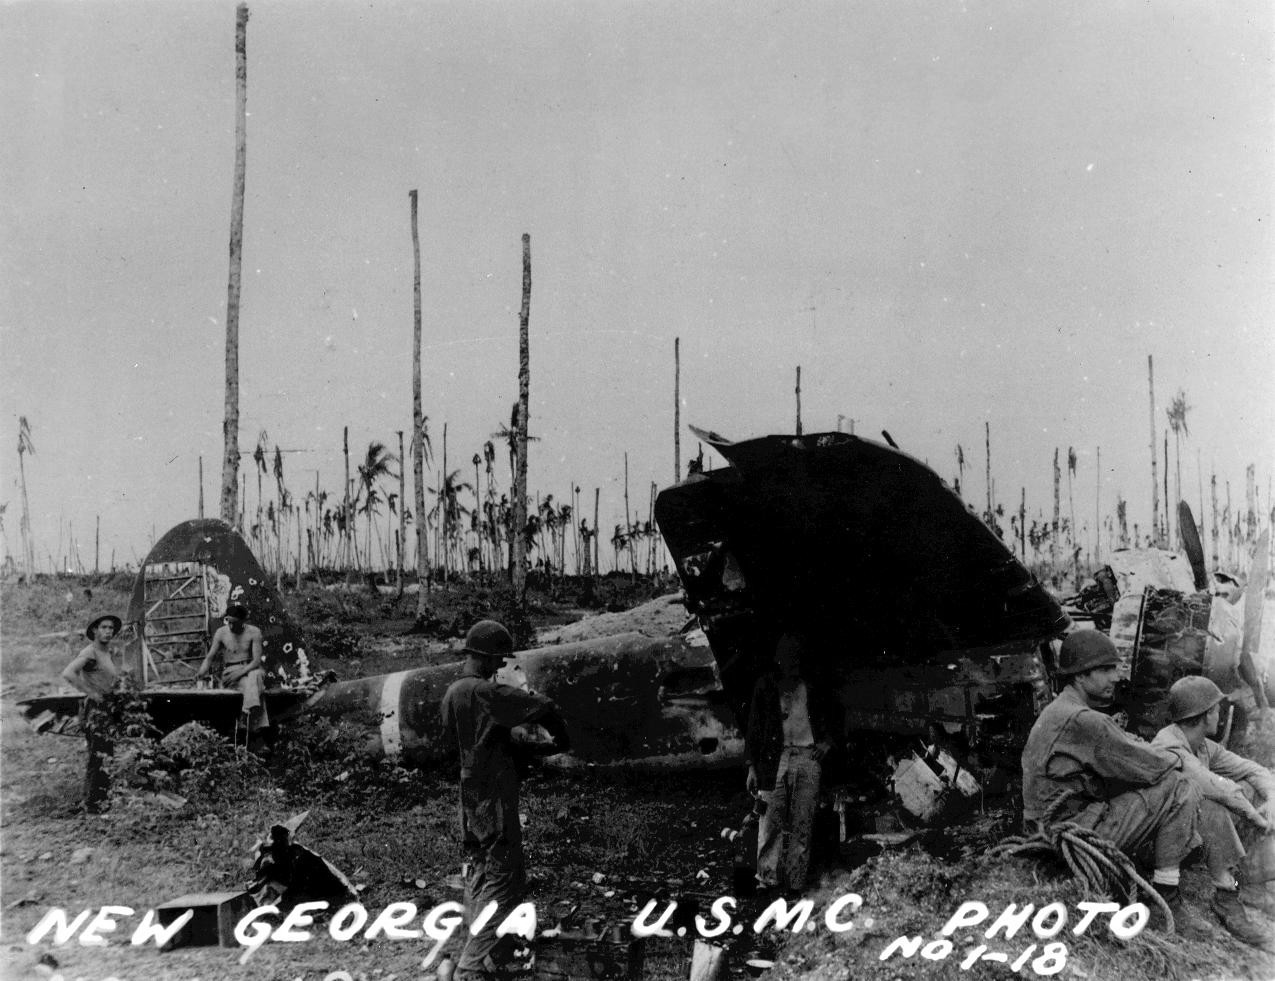 Wrecked aircraft, New Georgia, 1943